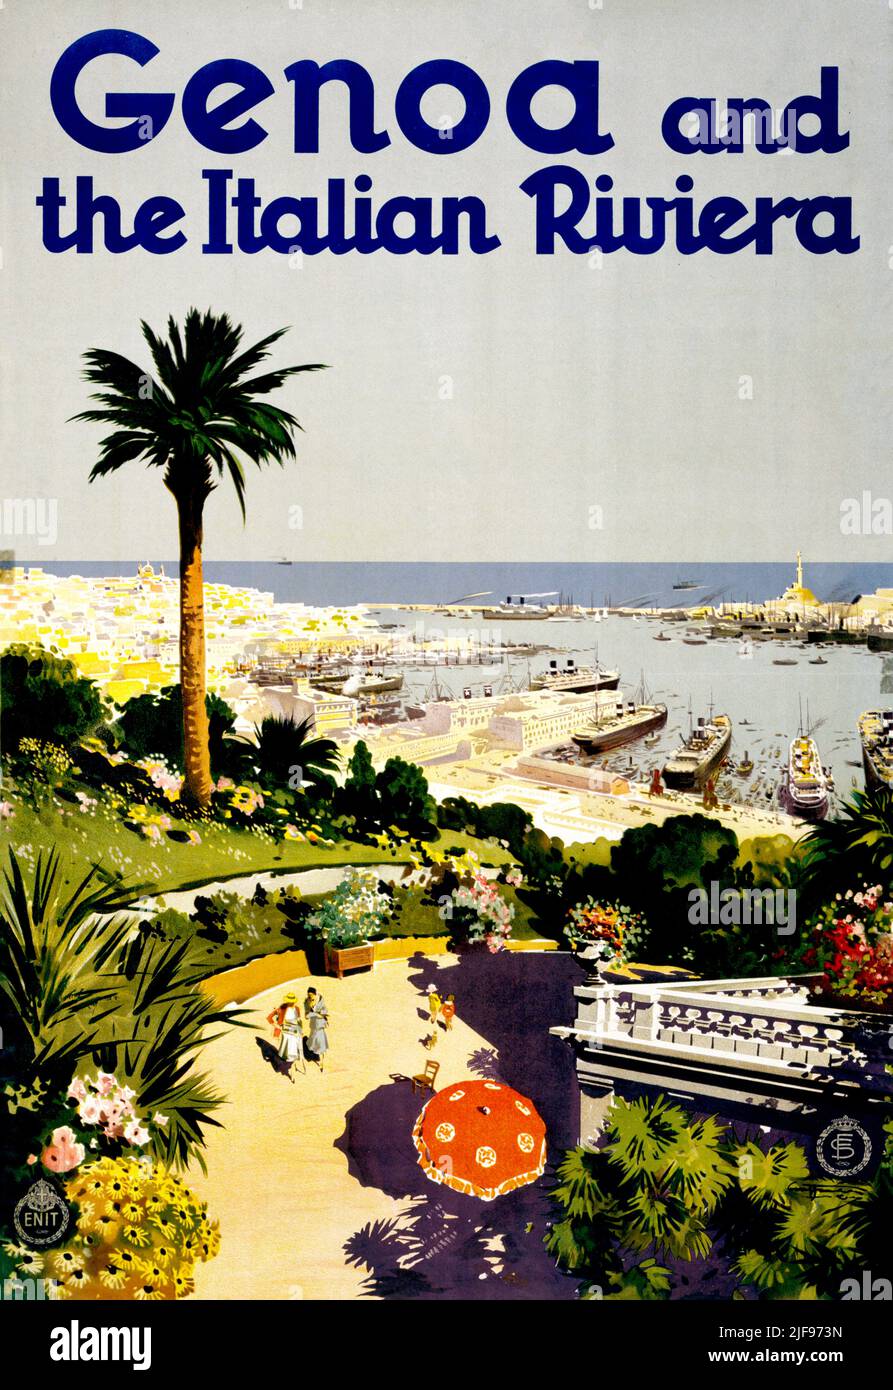 Genoa and the Italian Rivera by Aurelio Craffonara (1875-1945). Poster published in 1931 in Italy. Stock Photo